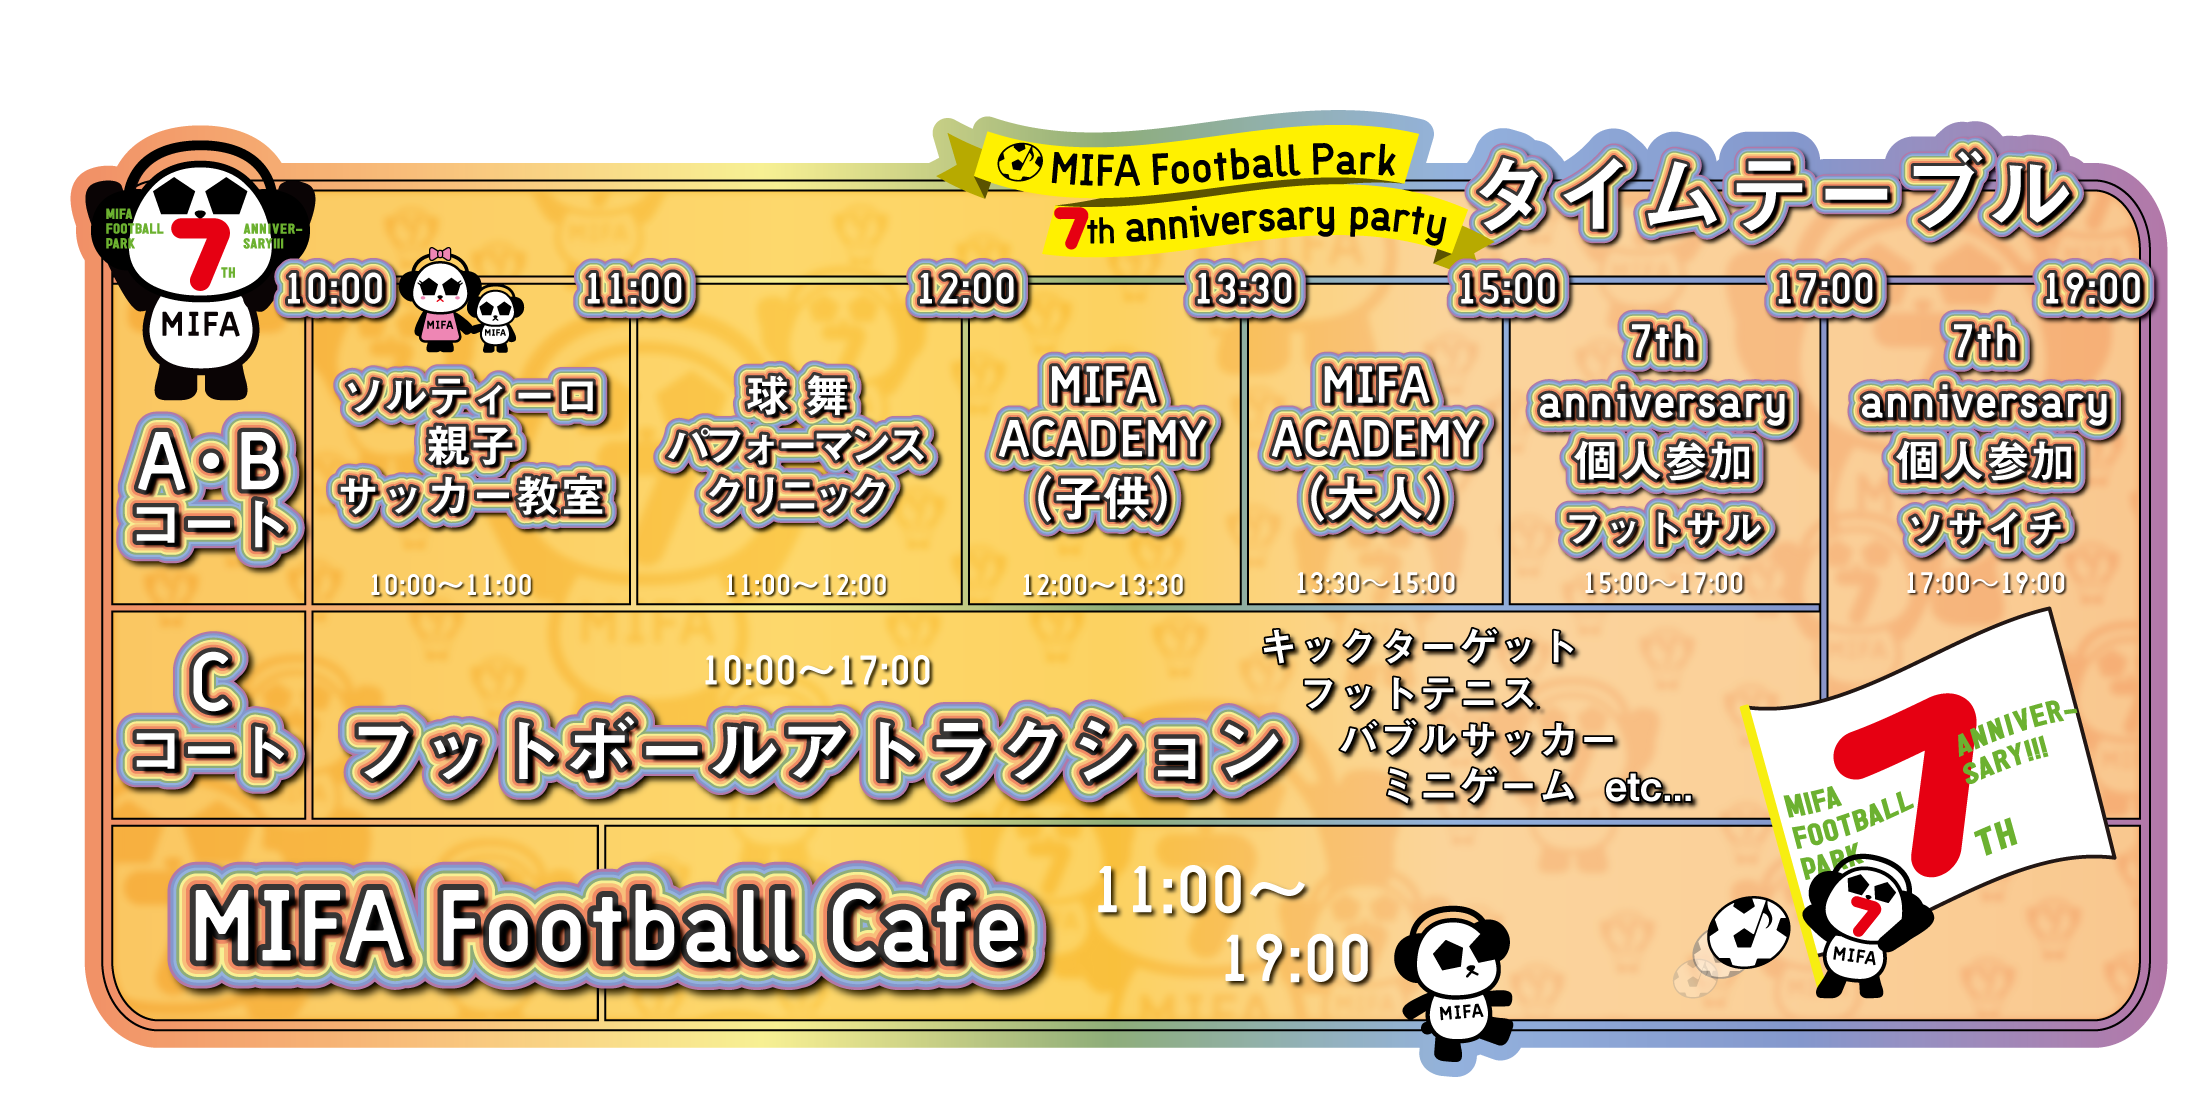 2021.8.14「MIFA Football Park 7th anniversary party」 タイムスケジュール